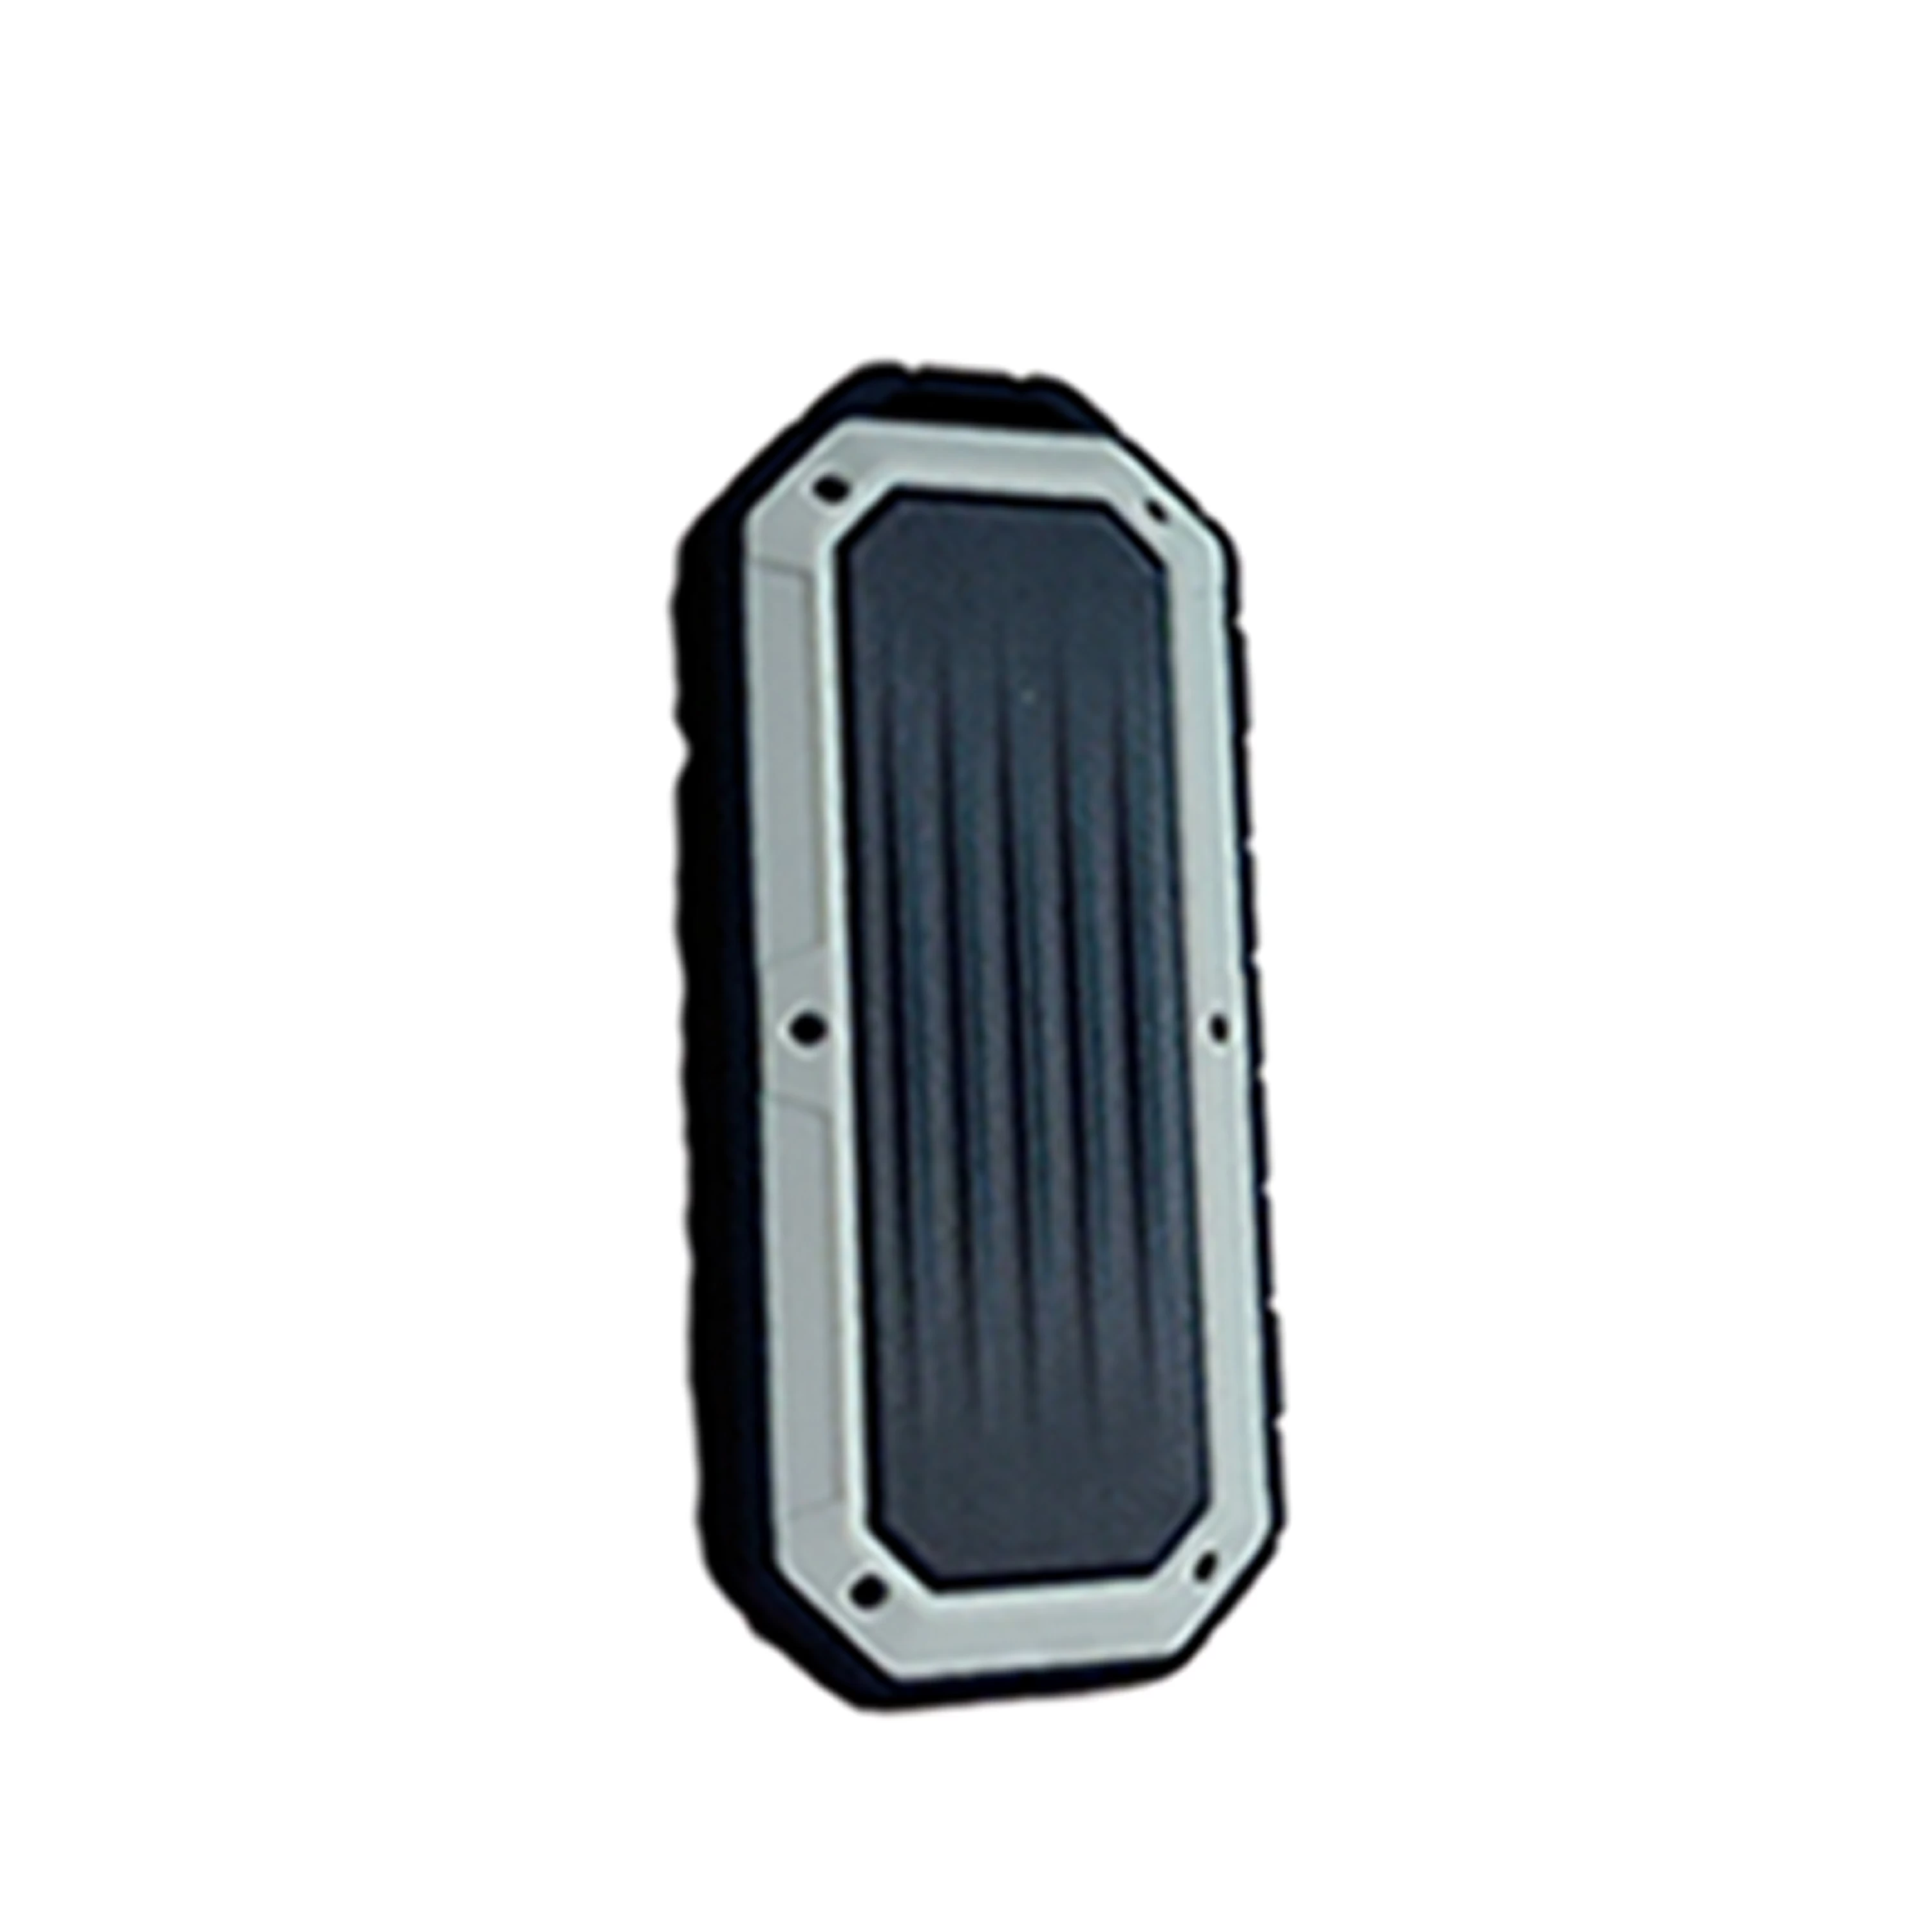 Altavoz Bluetooth impermeable IPX7 NSP-0202